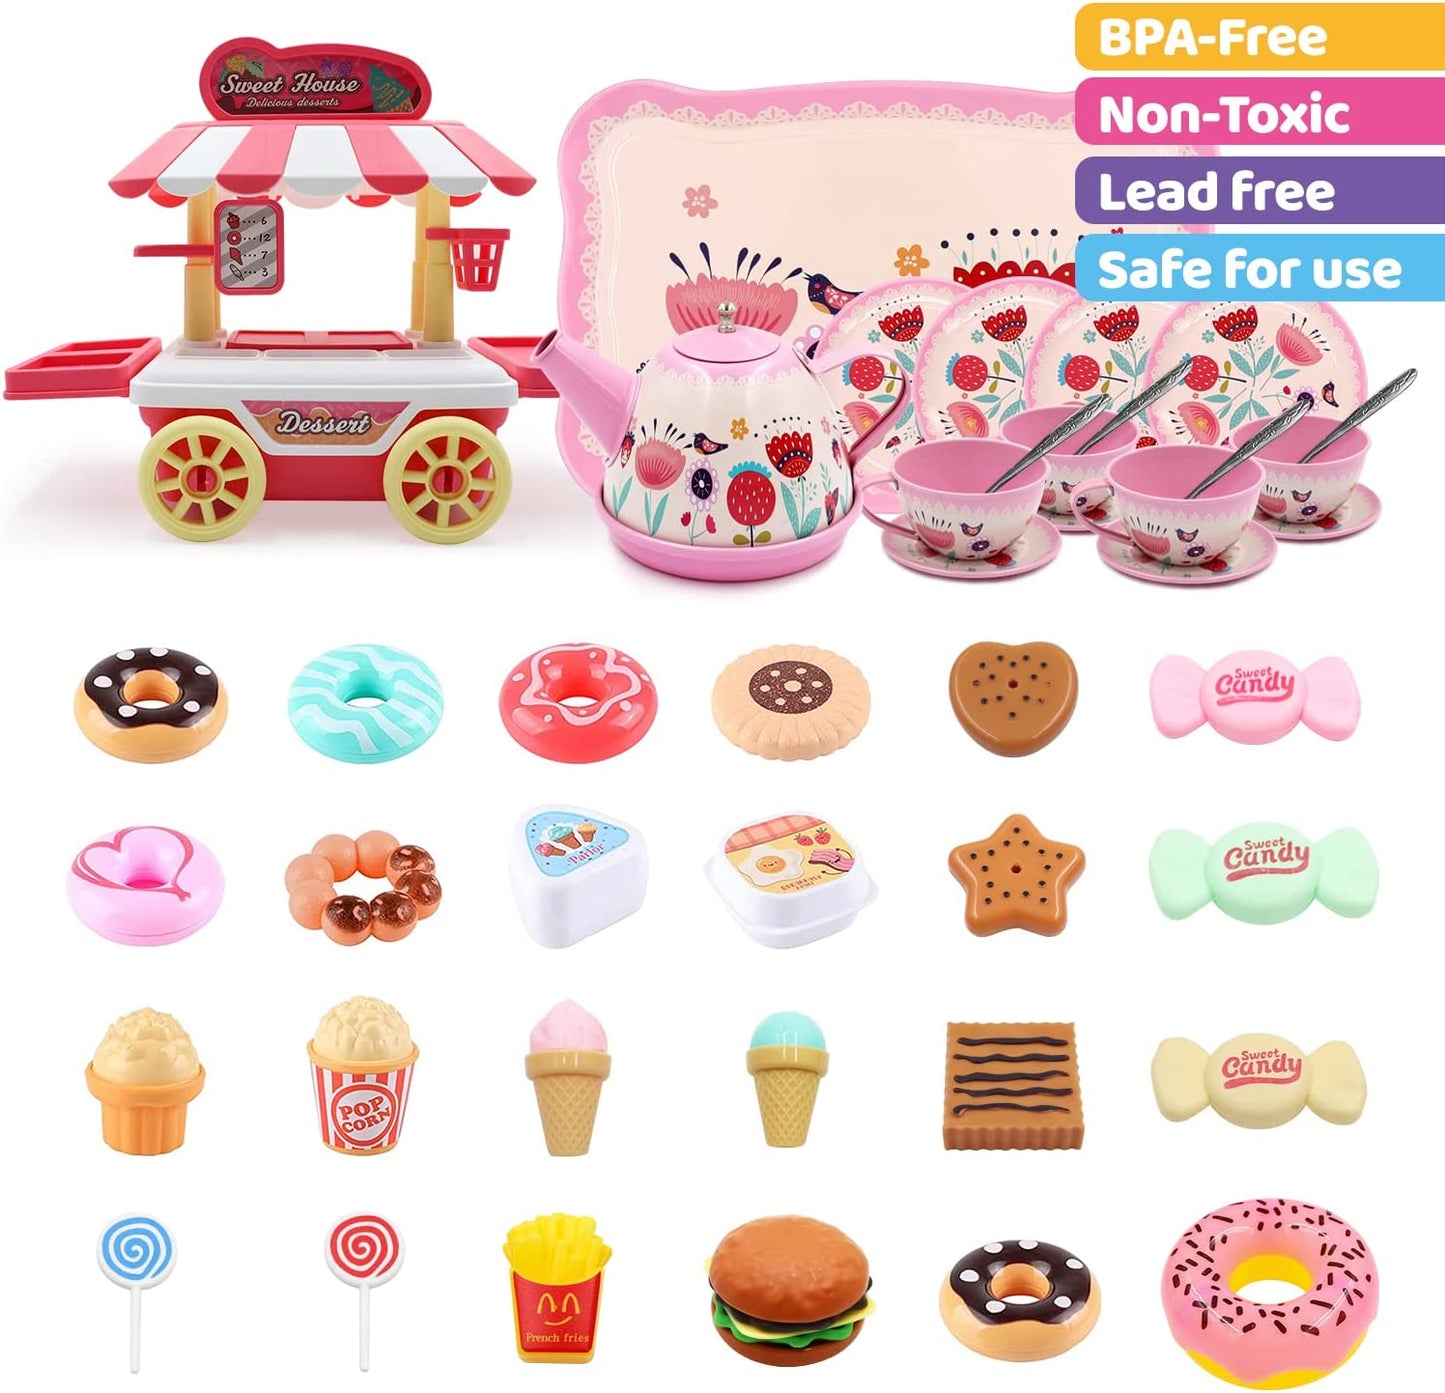 44PCS Tea Set for Little Girl, Princess Tea Time Toys Playset